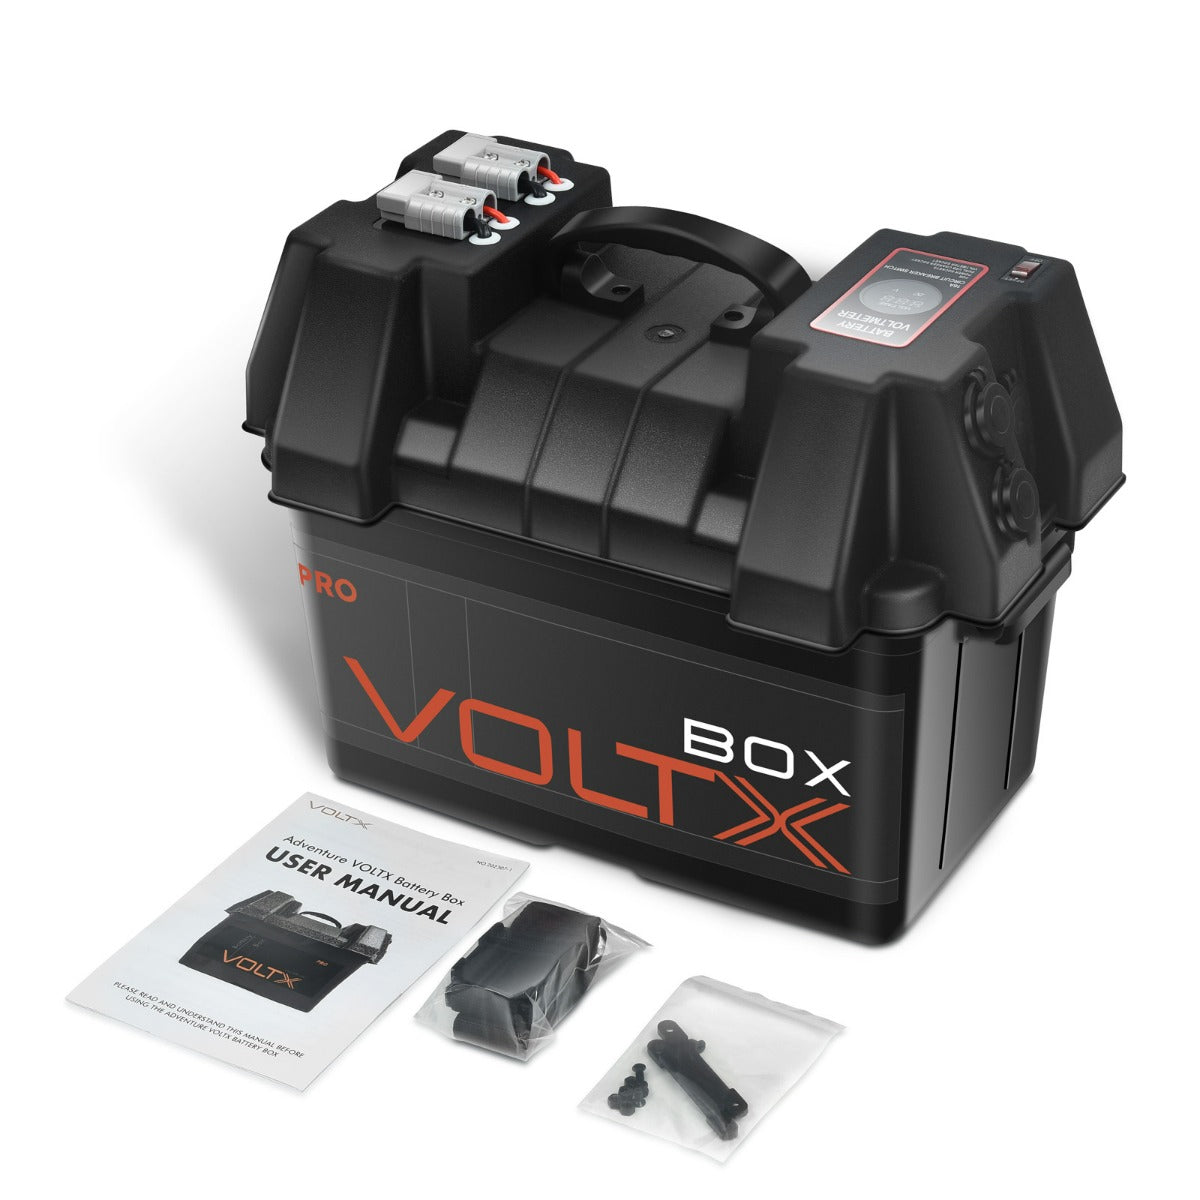 VoltX 12V Battery Box Pro with Dual USB & Cig Socket